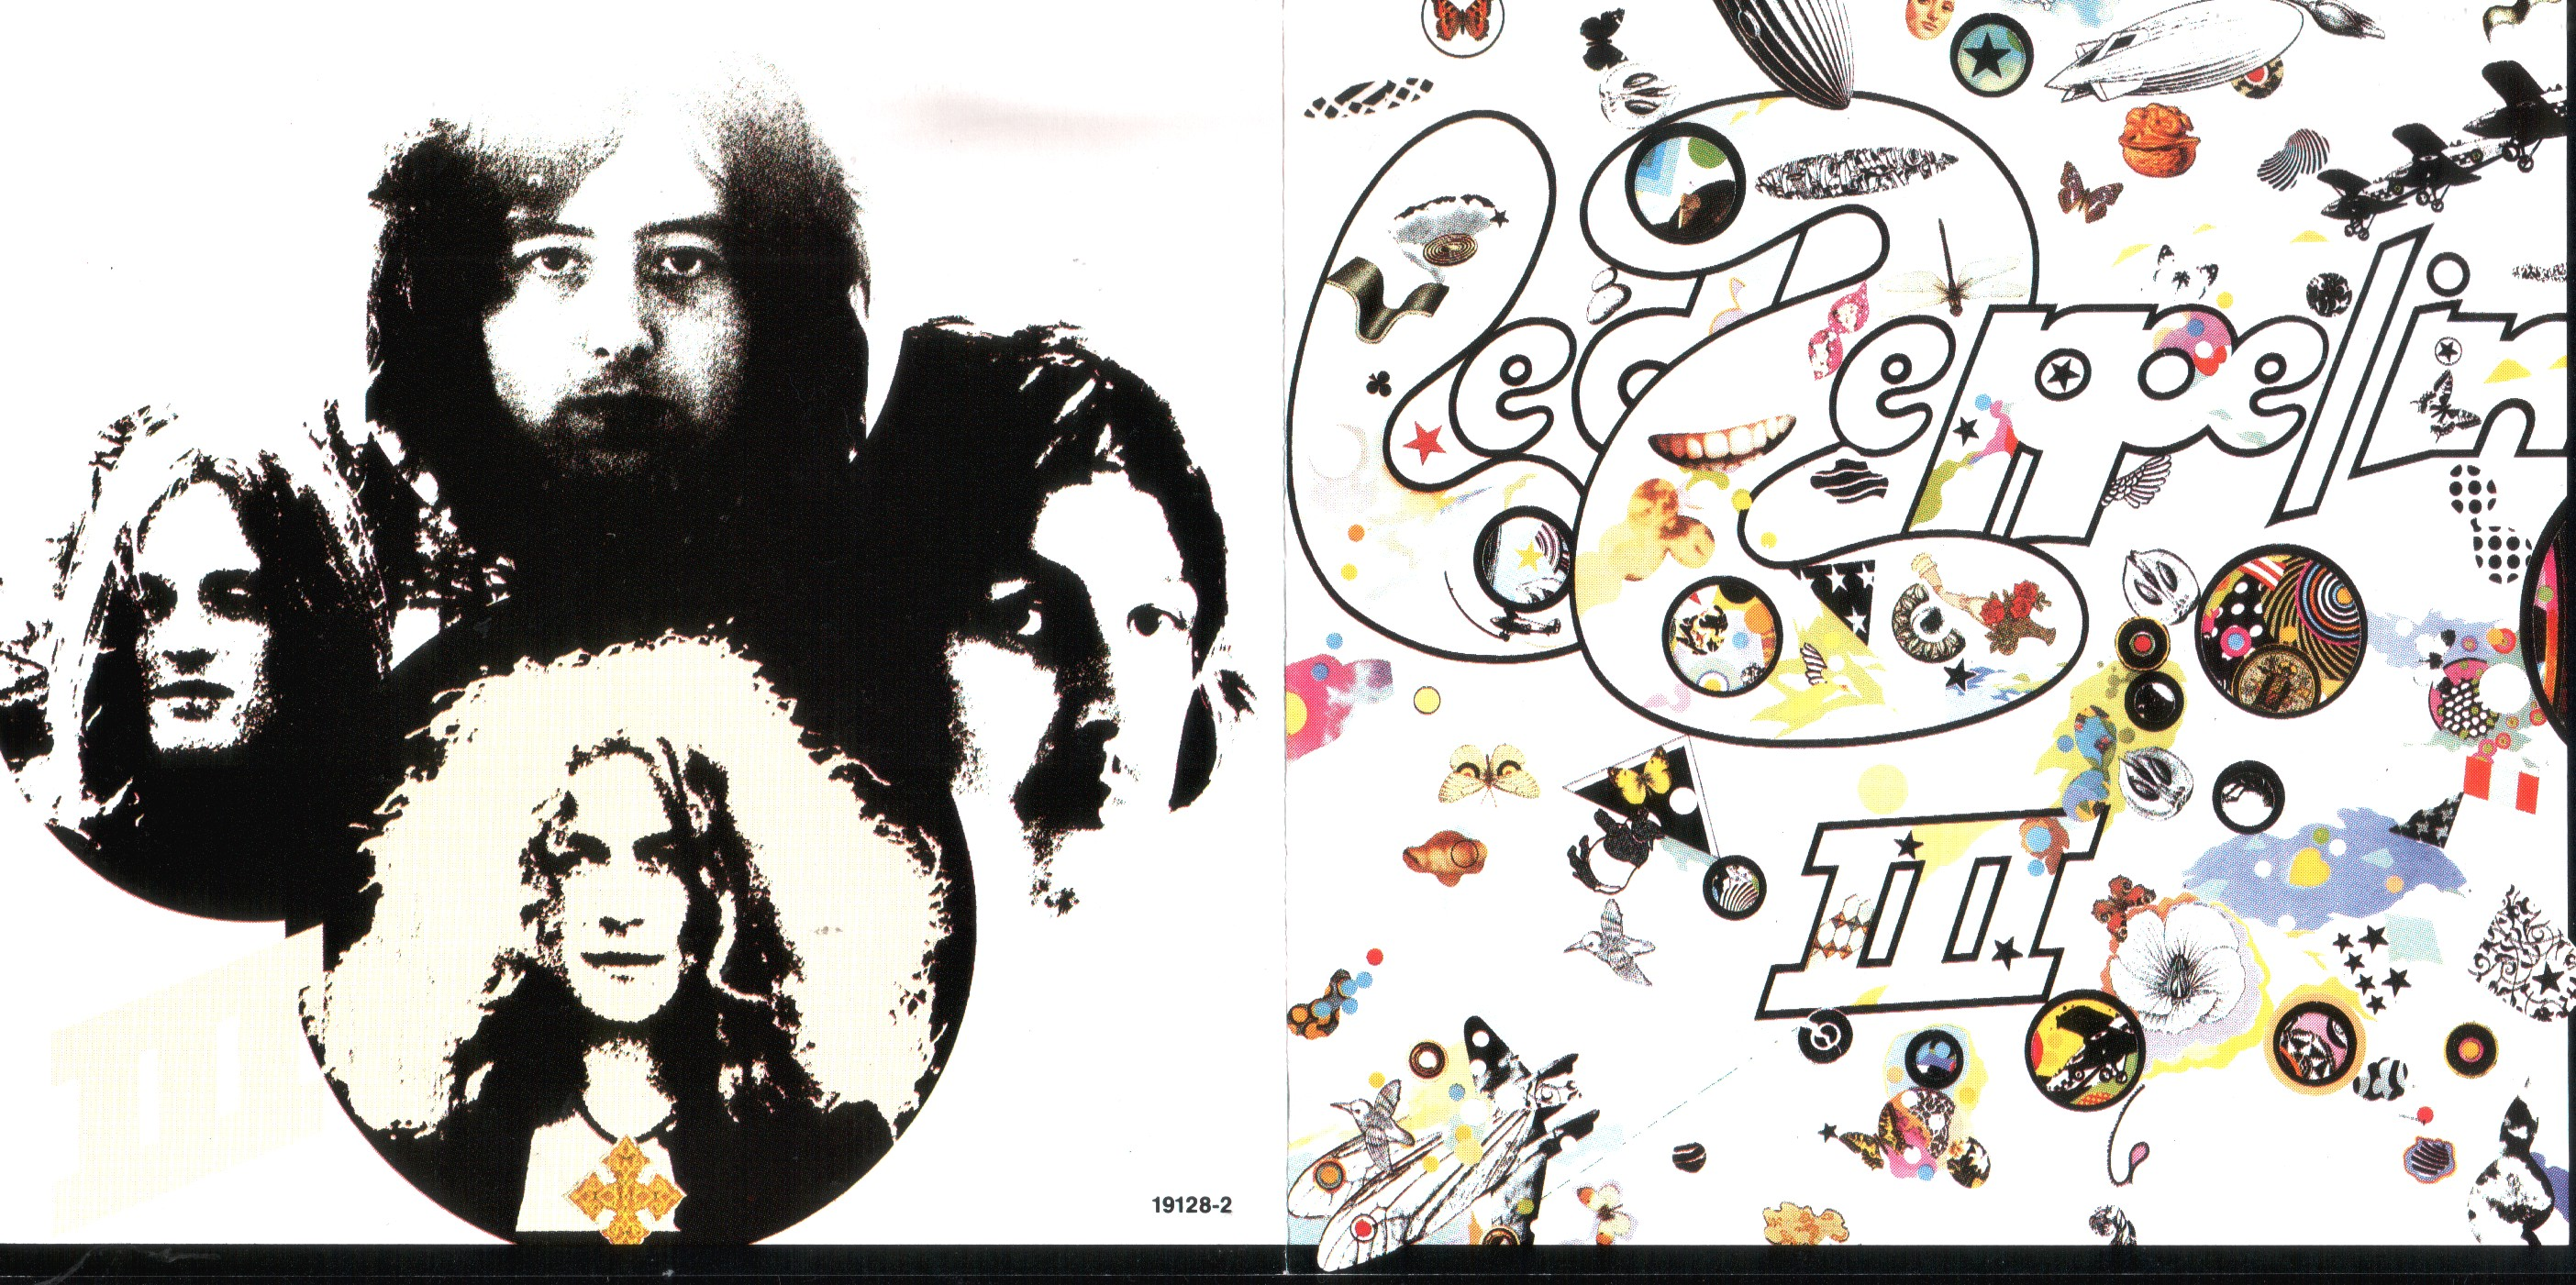 1970 Led Zeppelin III обложка. Led Zeppelin 3 обложка. Led Zeppelin 3 LP. Led Zeppelin "led Zeppelin 3". Led zeppelin iii led zeppelin